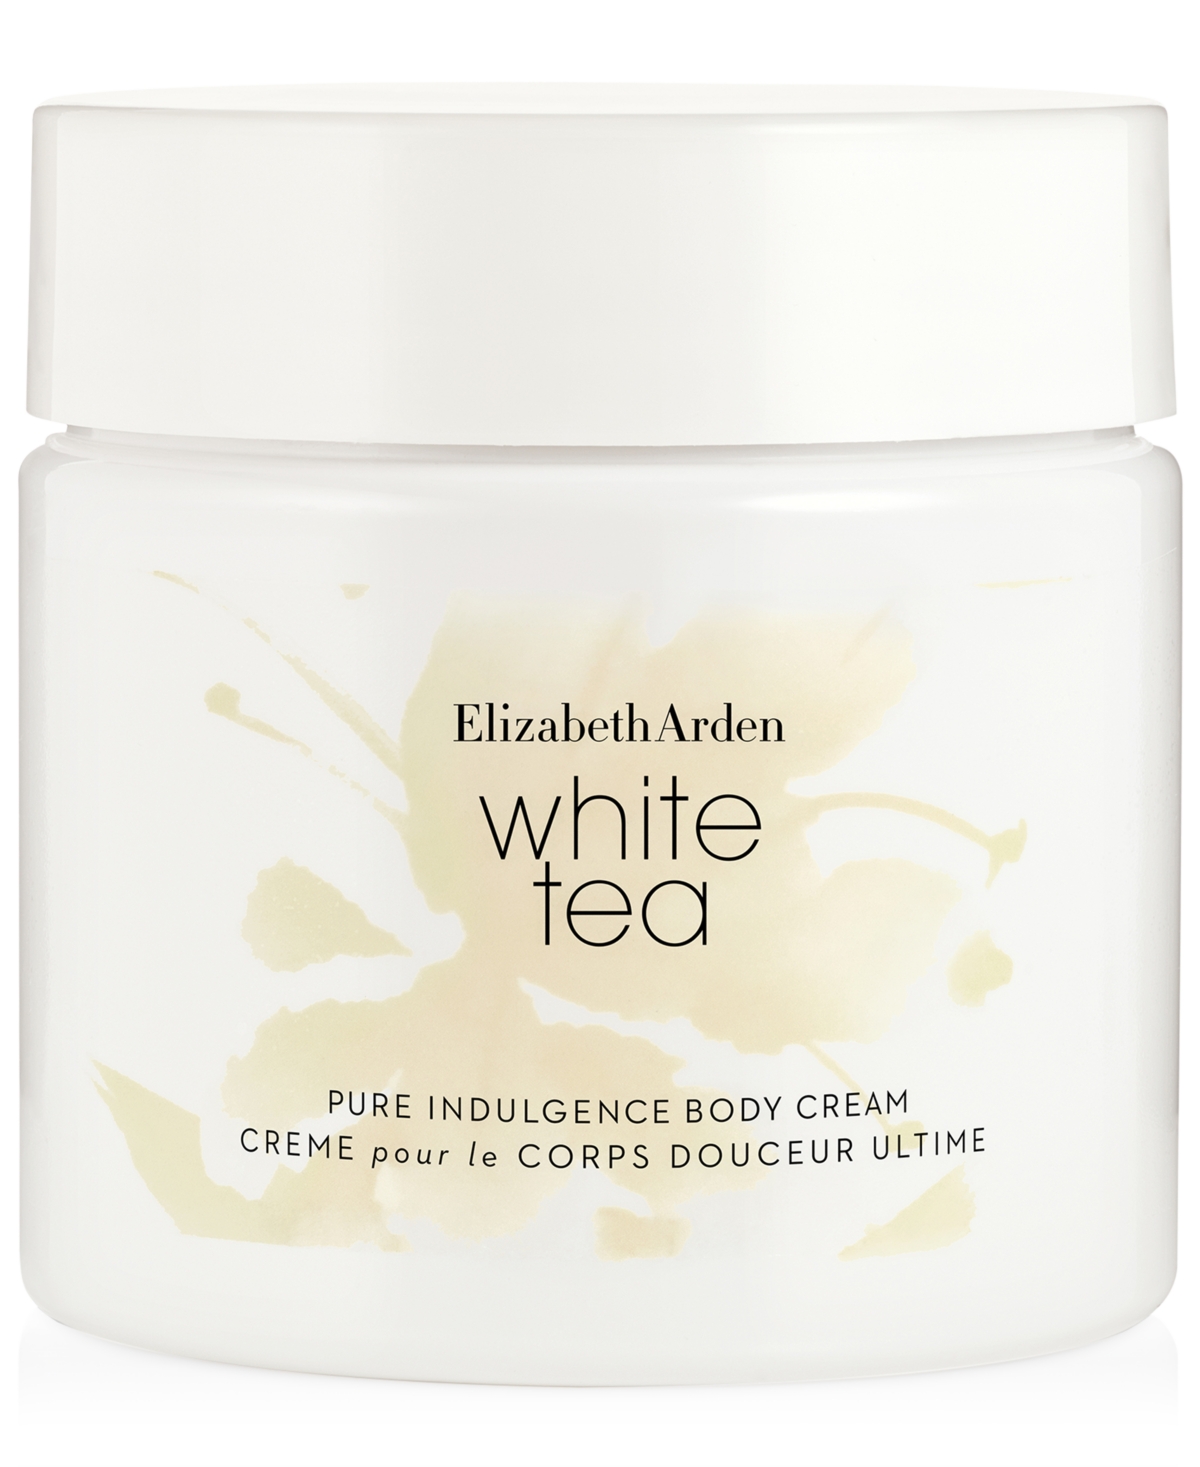 White Tea Pure Indulgence Body Cream, 13.5 oz